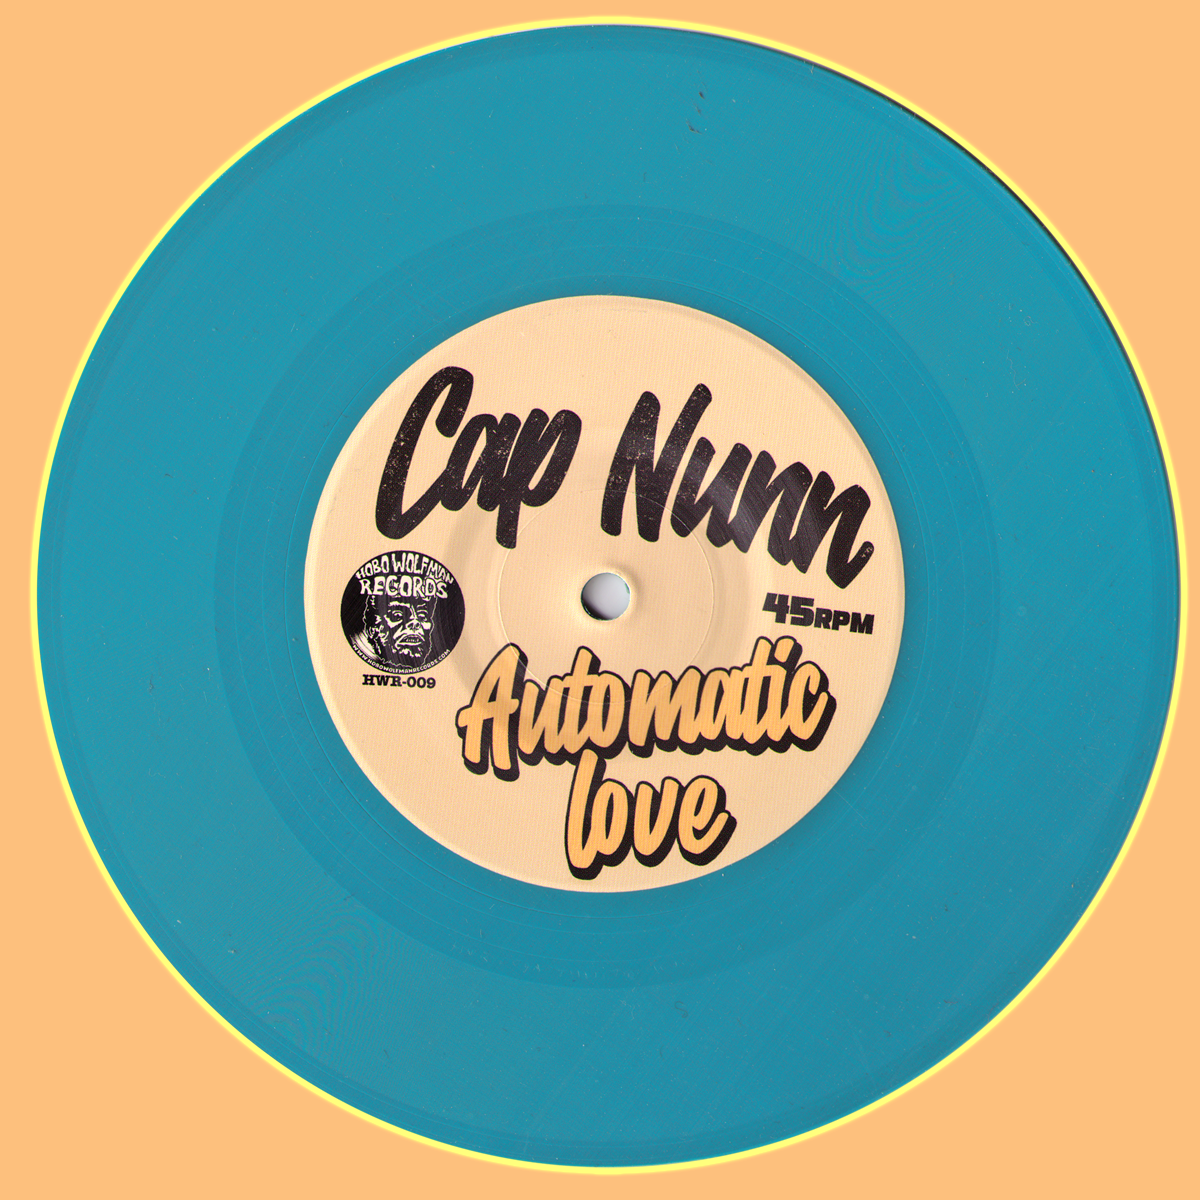 Cap Nunn - Automatic Love 7" ~RARE TURQUOISE WAX!